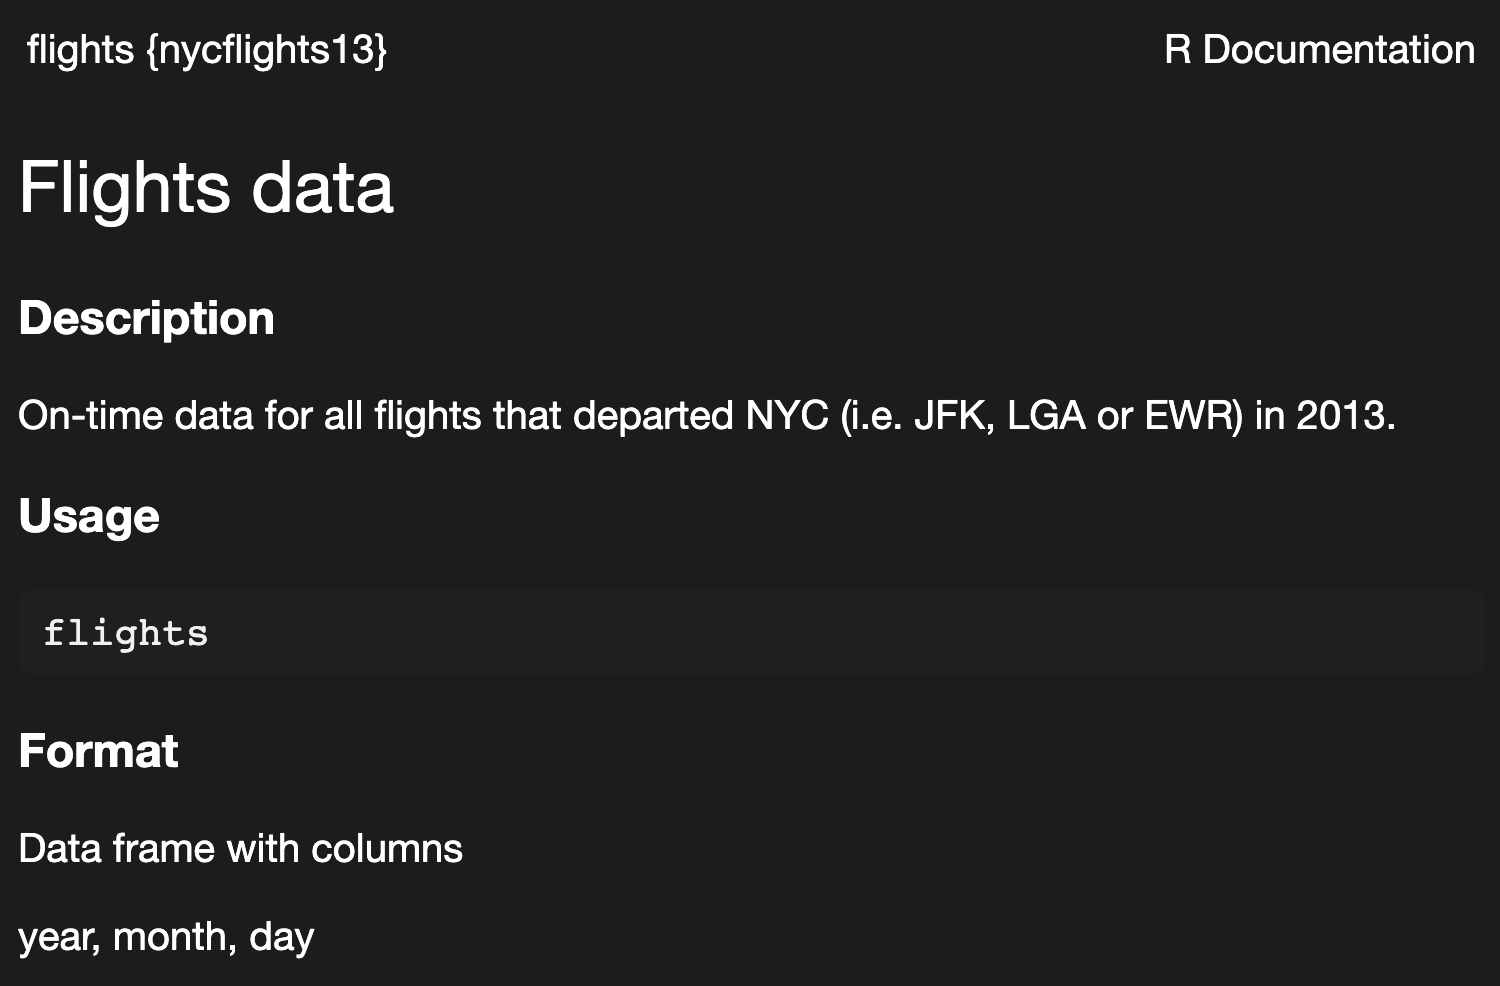 doc pages for flights dataset